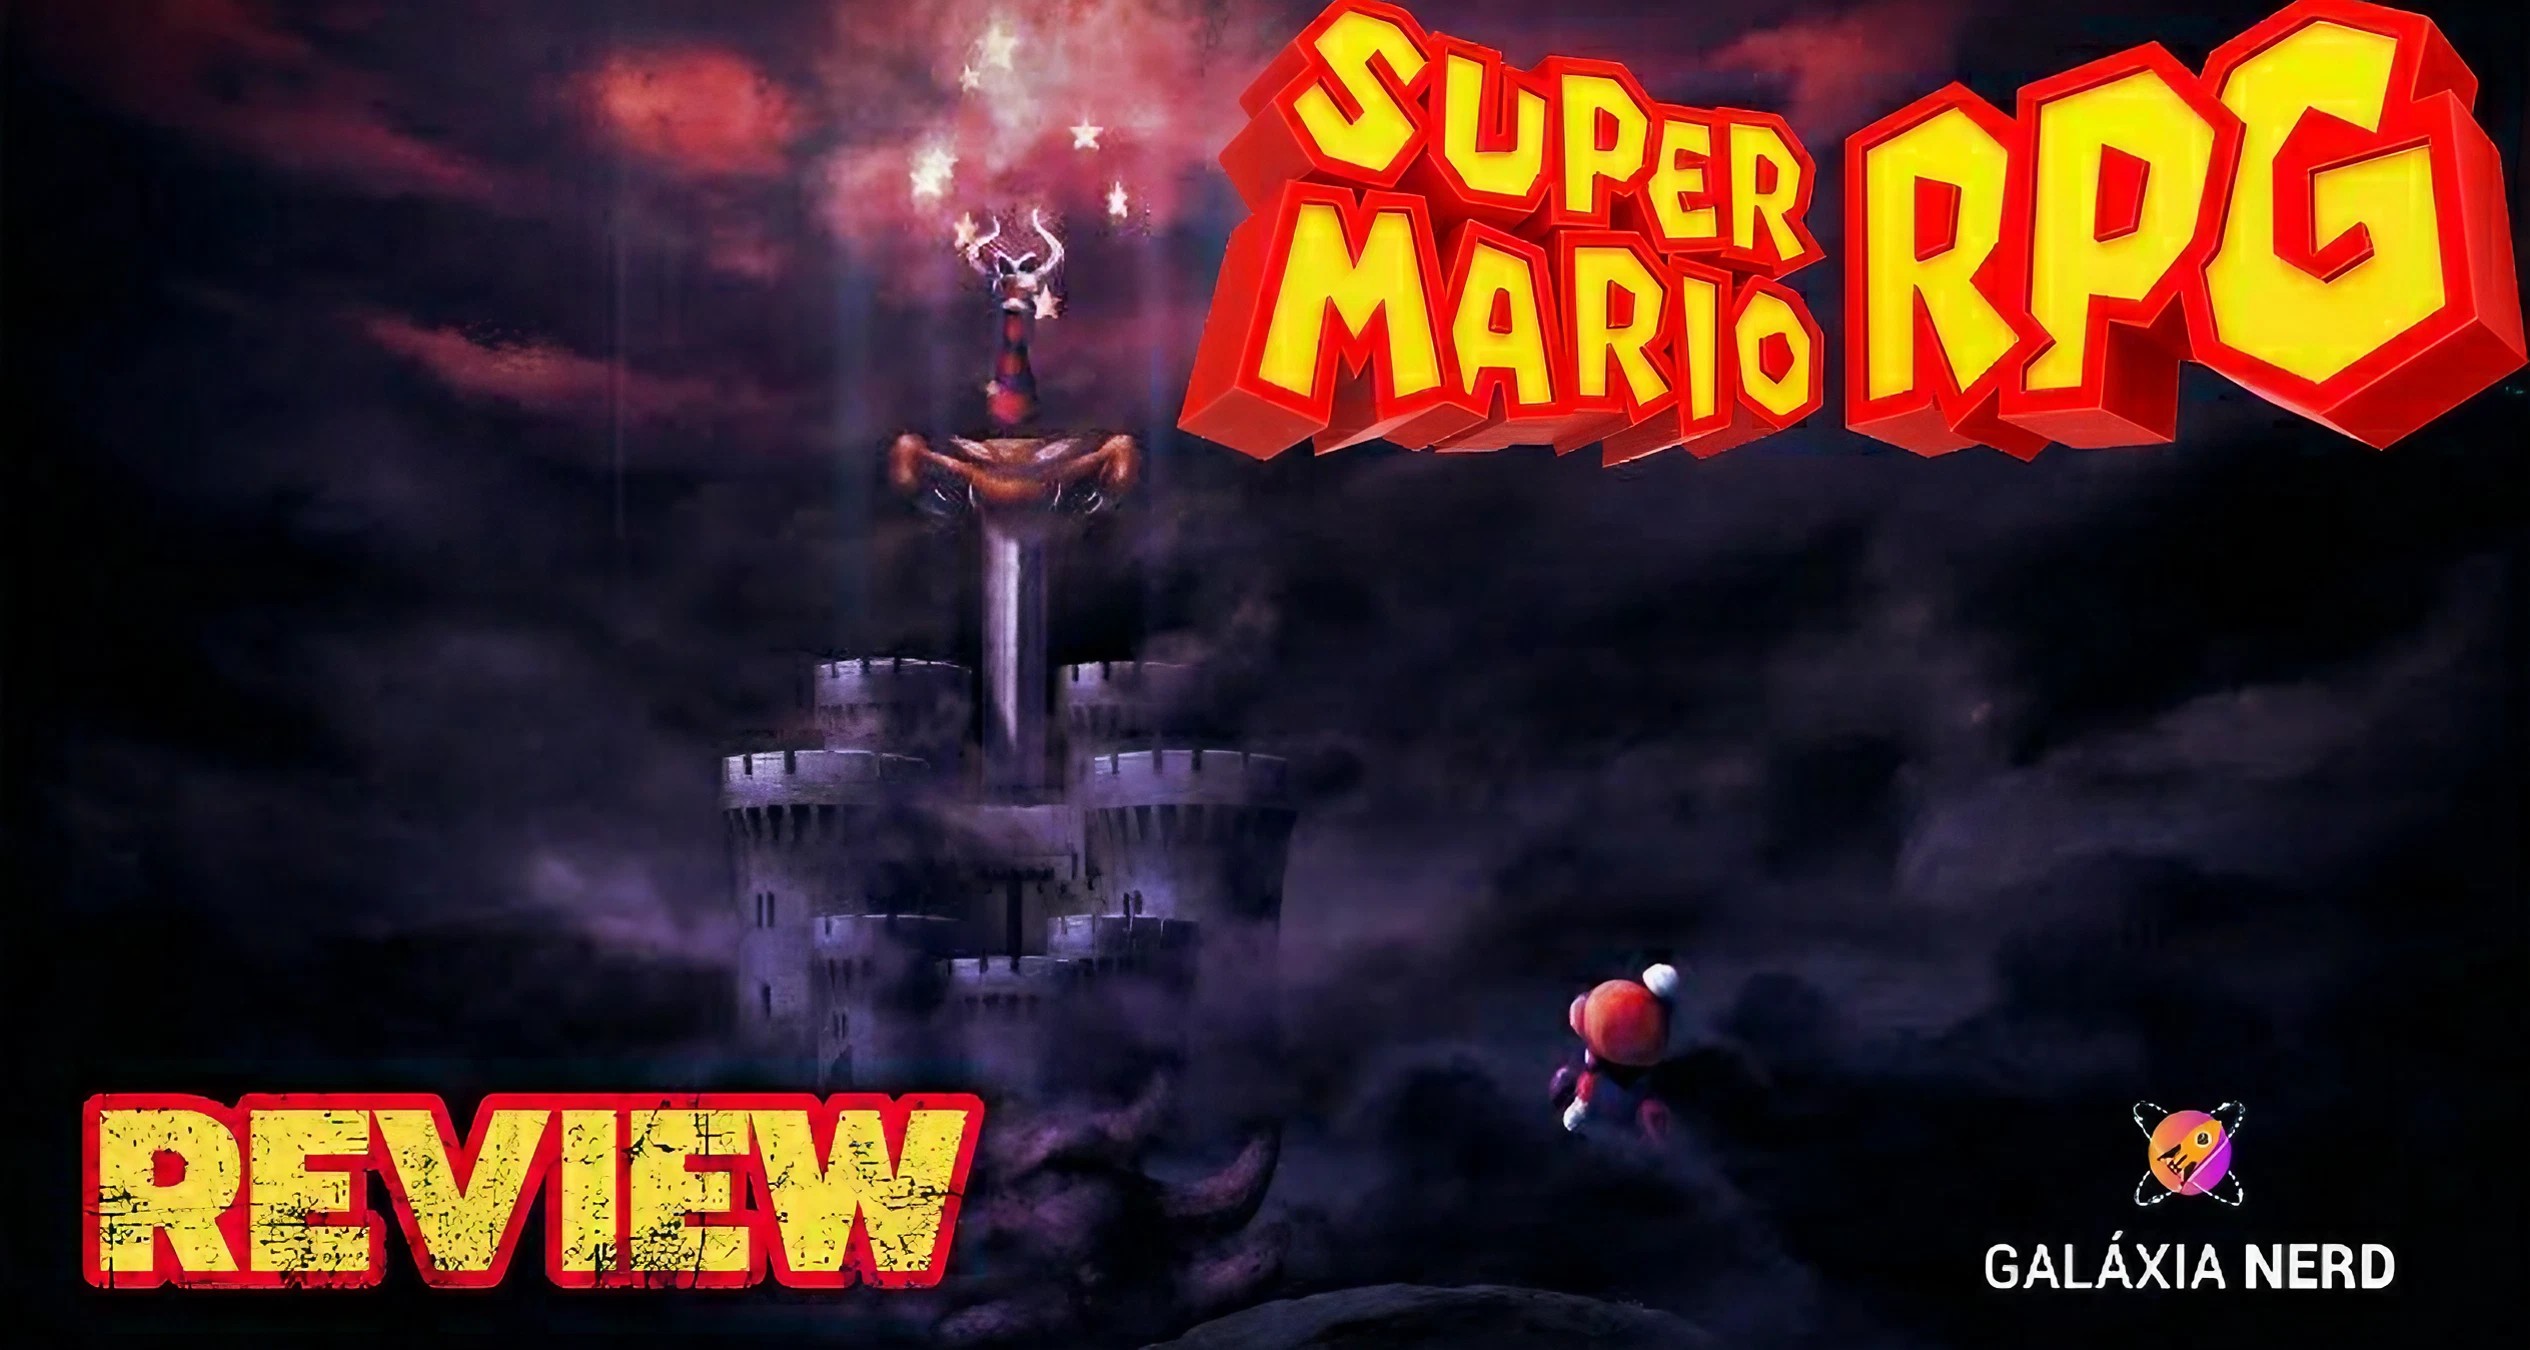 Review - Super Mario RPG REMAKE